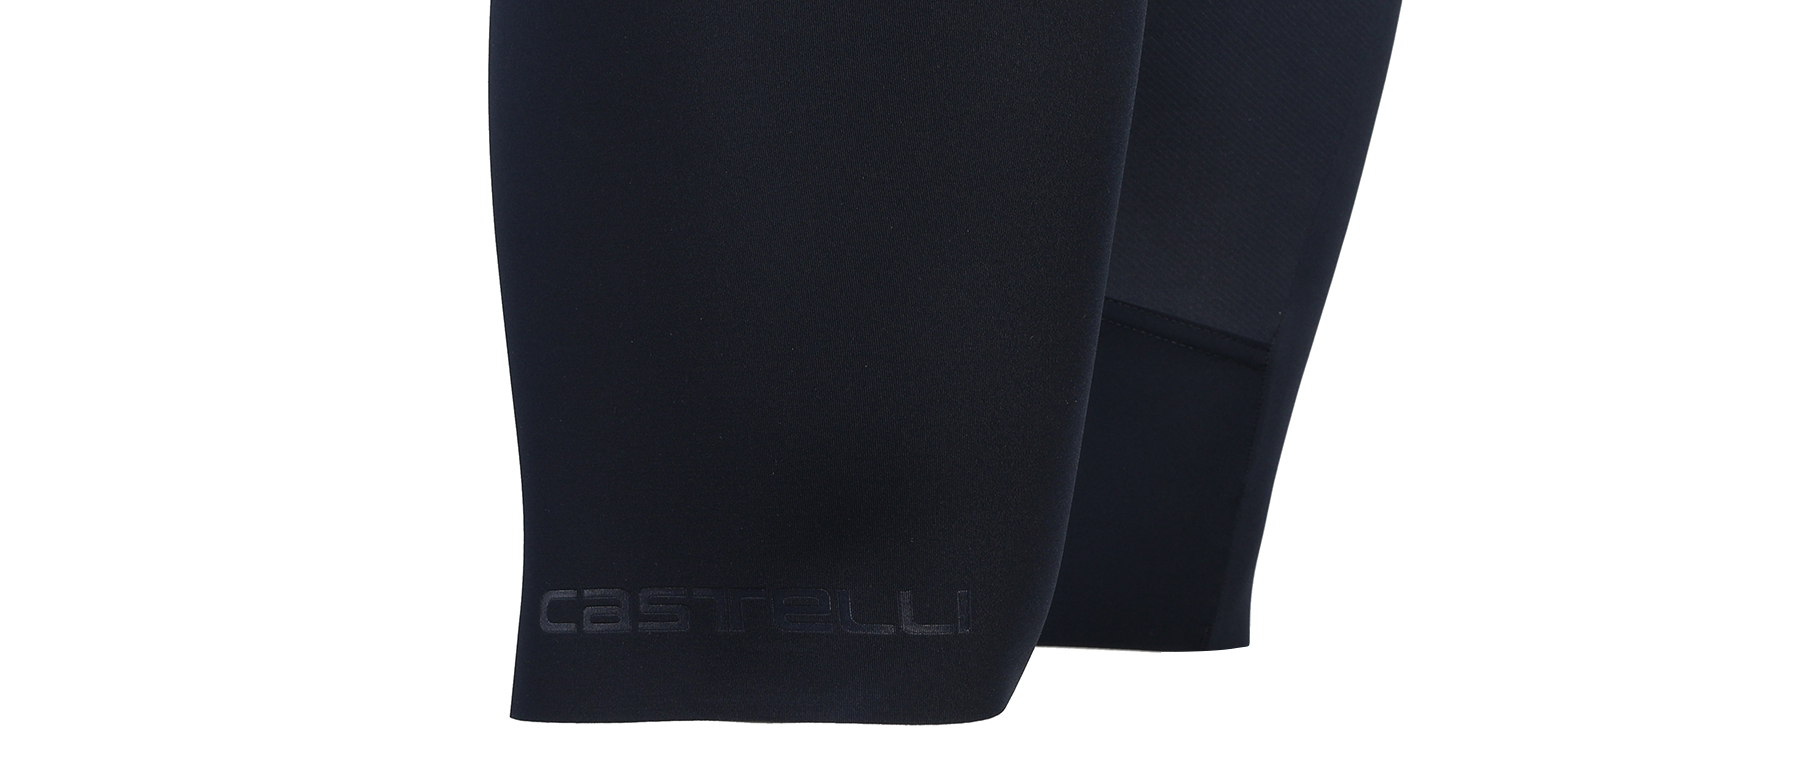 Castelli Free Aero RC Bib Shorts